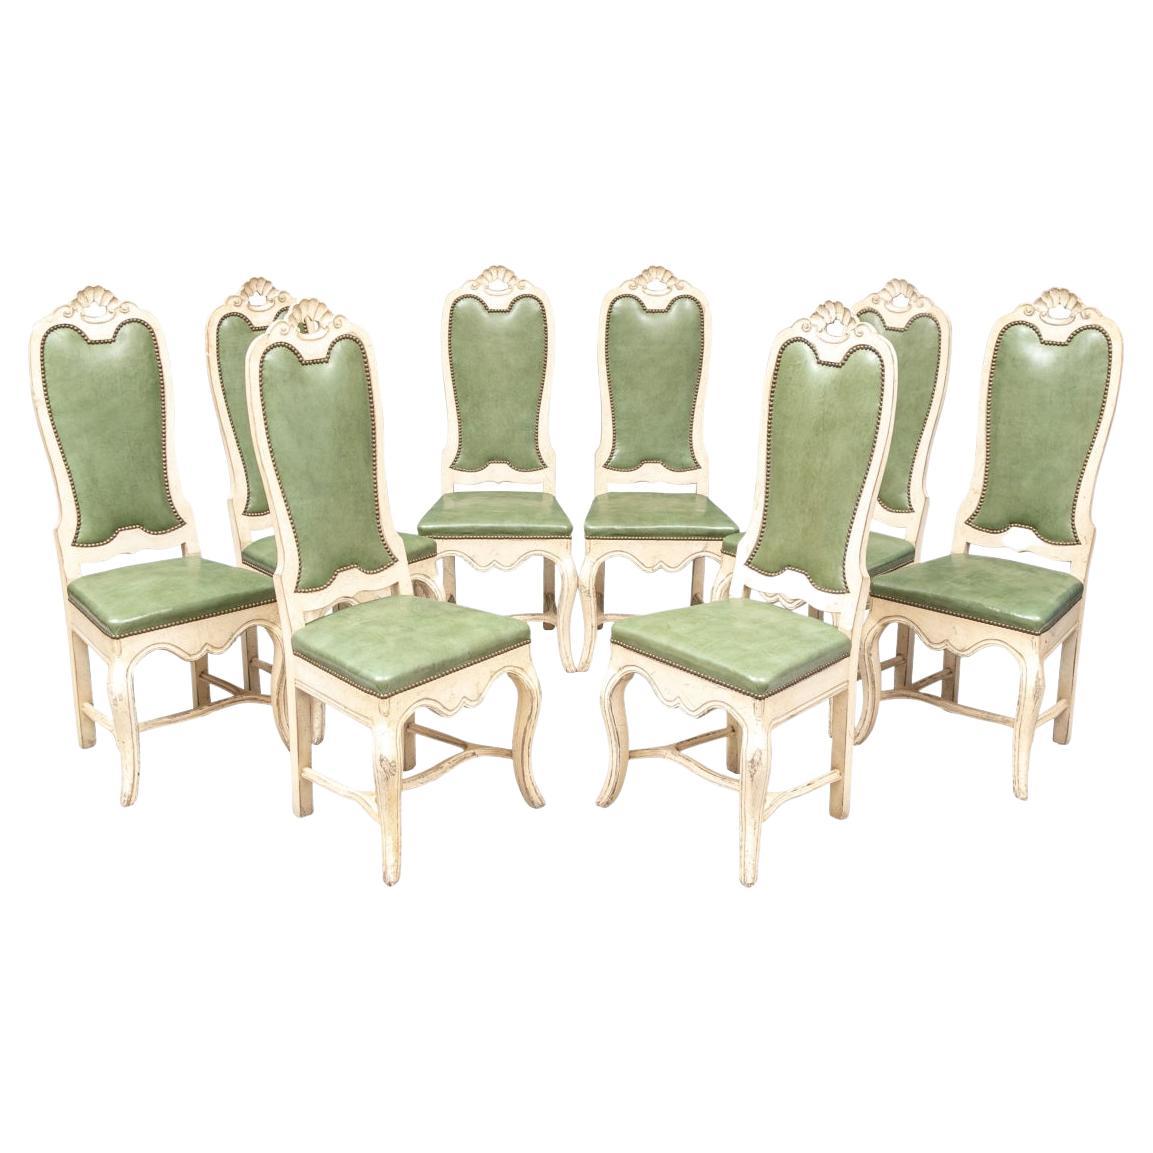 Set aus 8 cremefarben lackierten Obstholz-Esszimmerstühlen mit grünem Kunstlederbezug